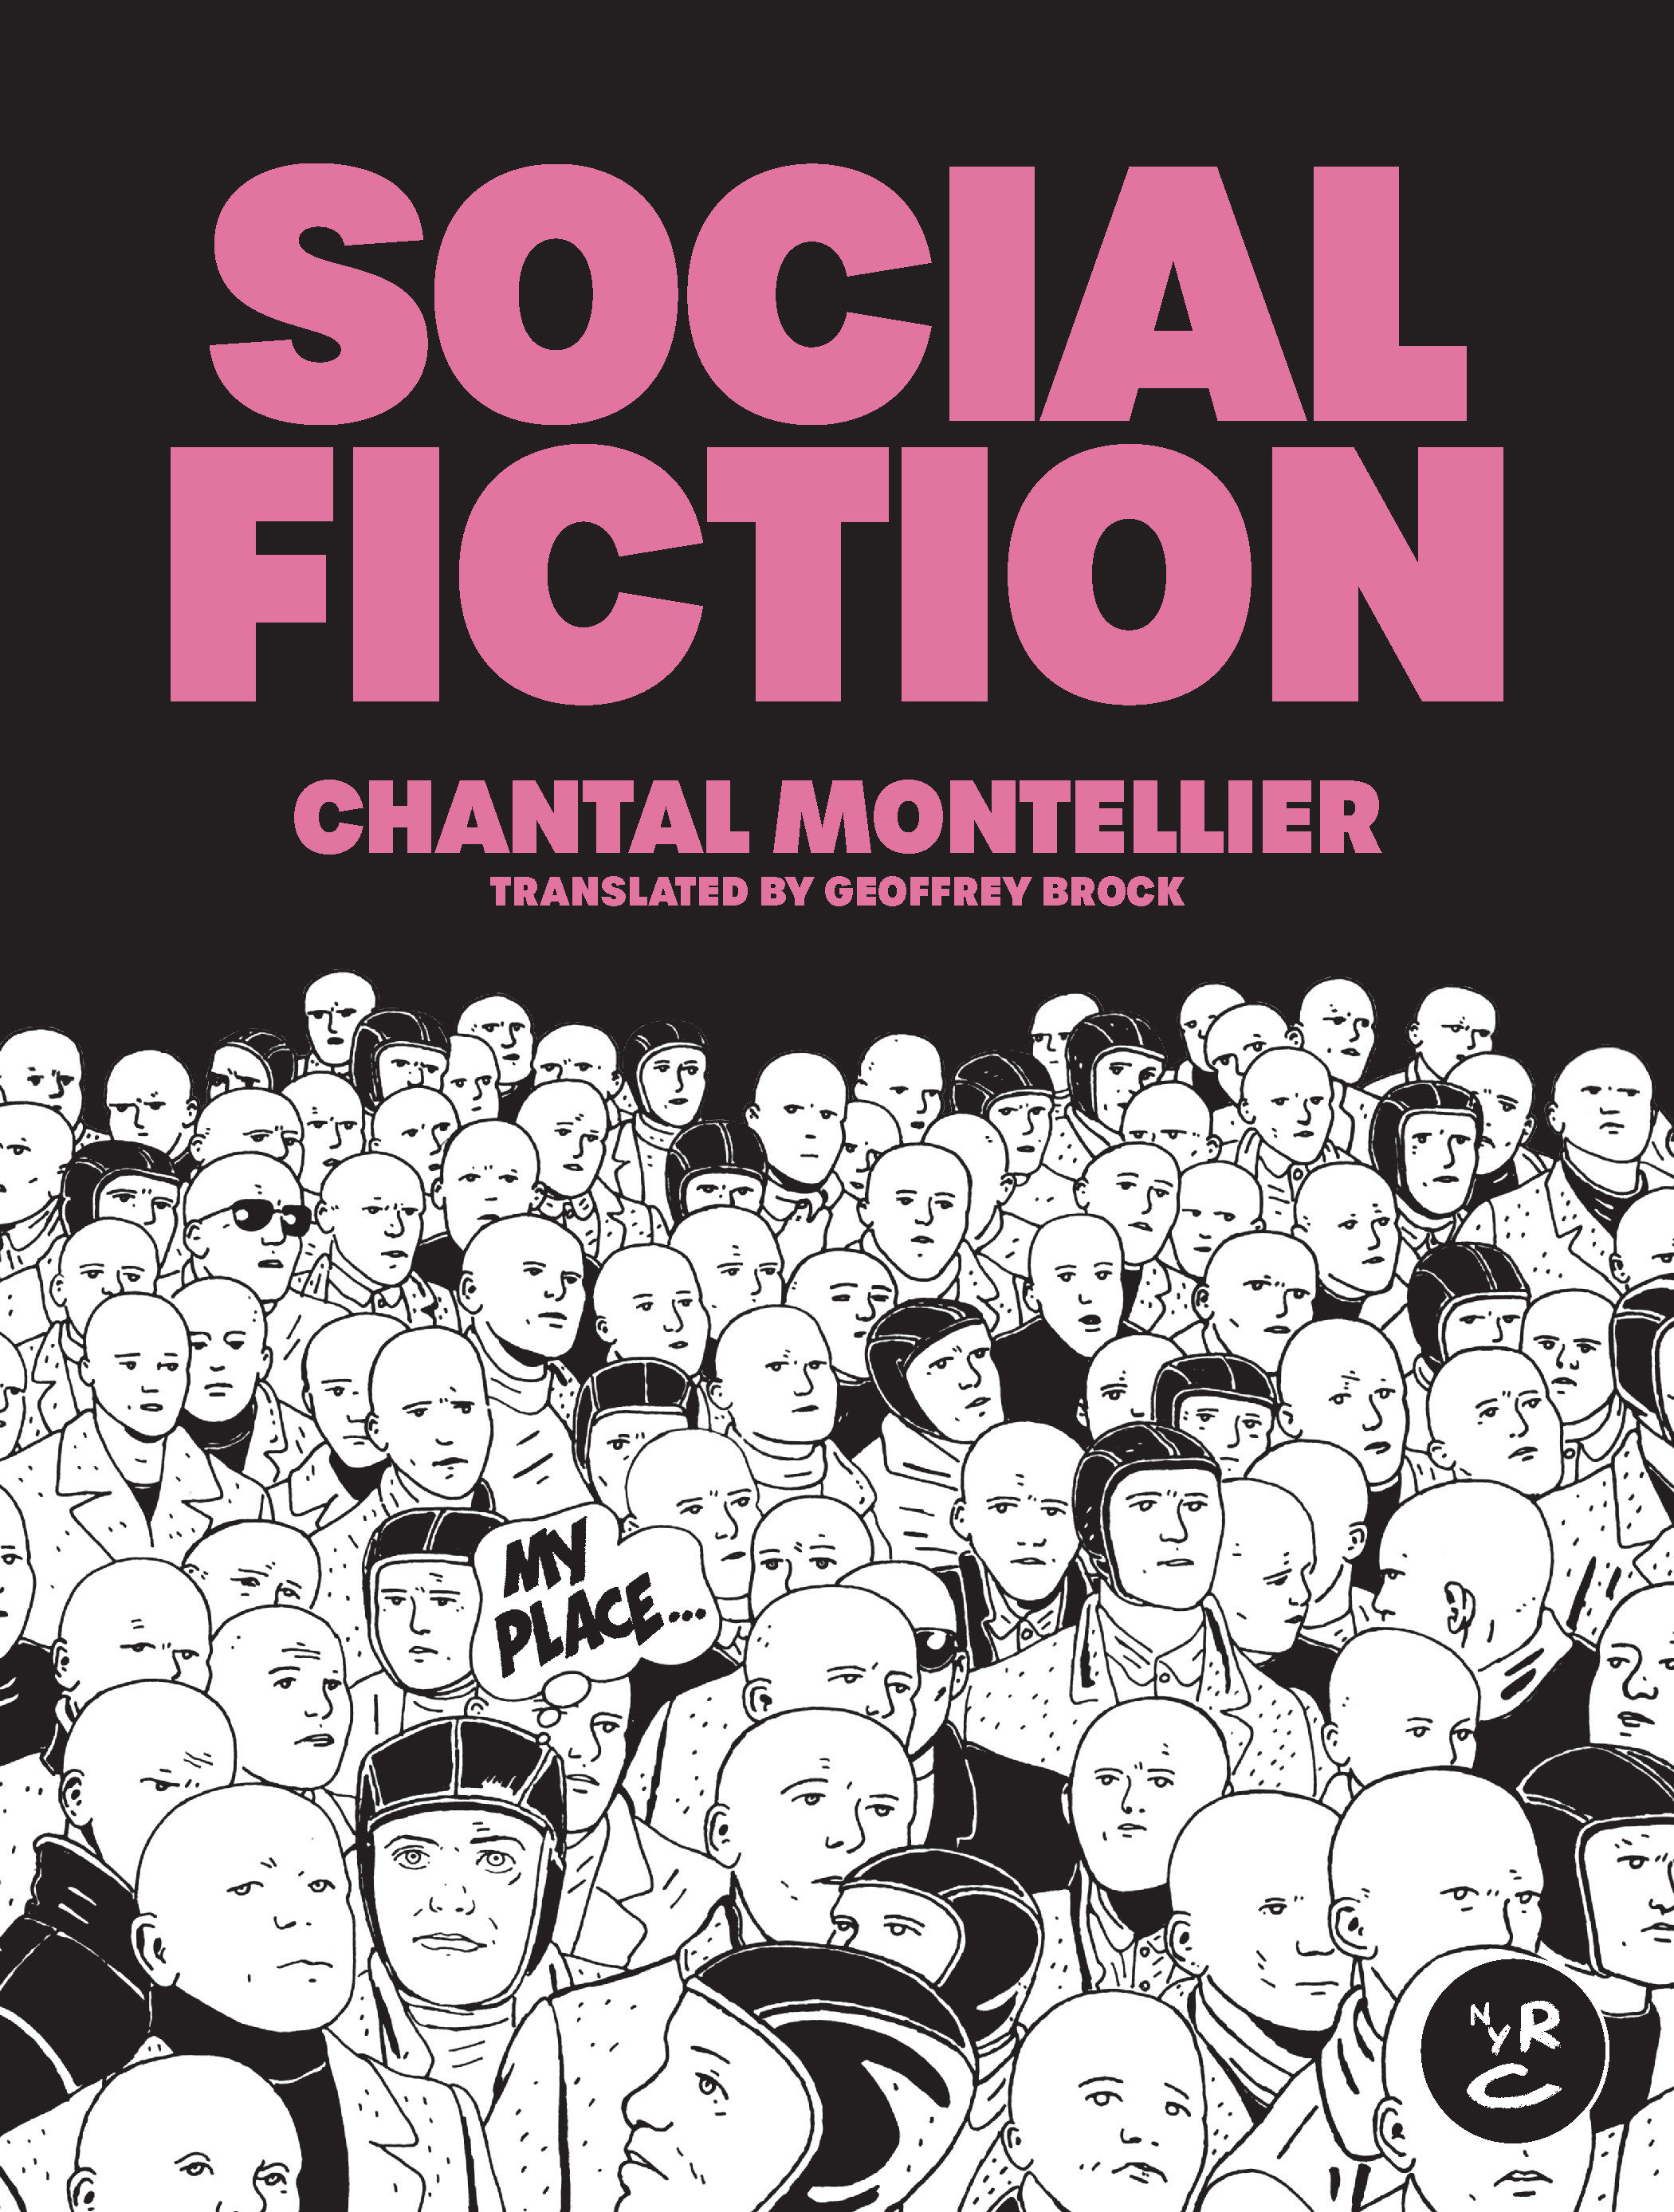 Social Fiction Graphic Novel